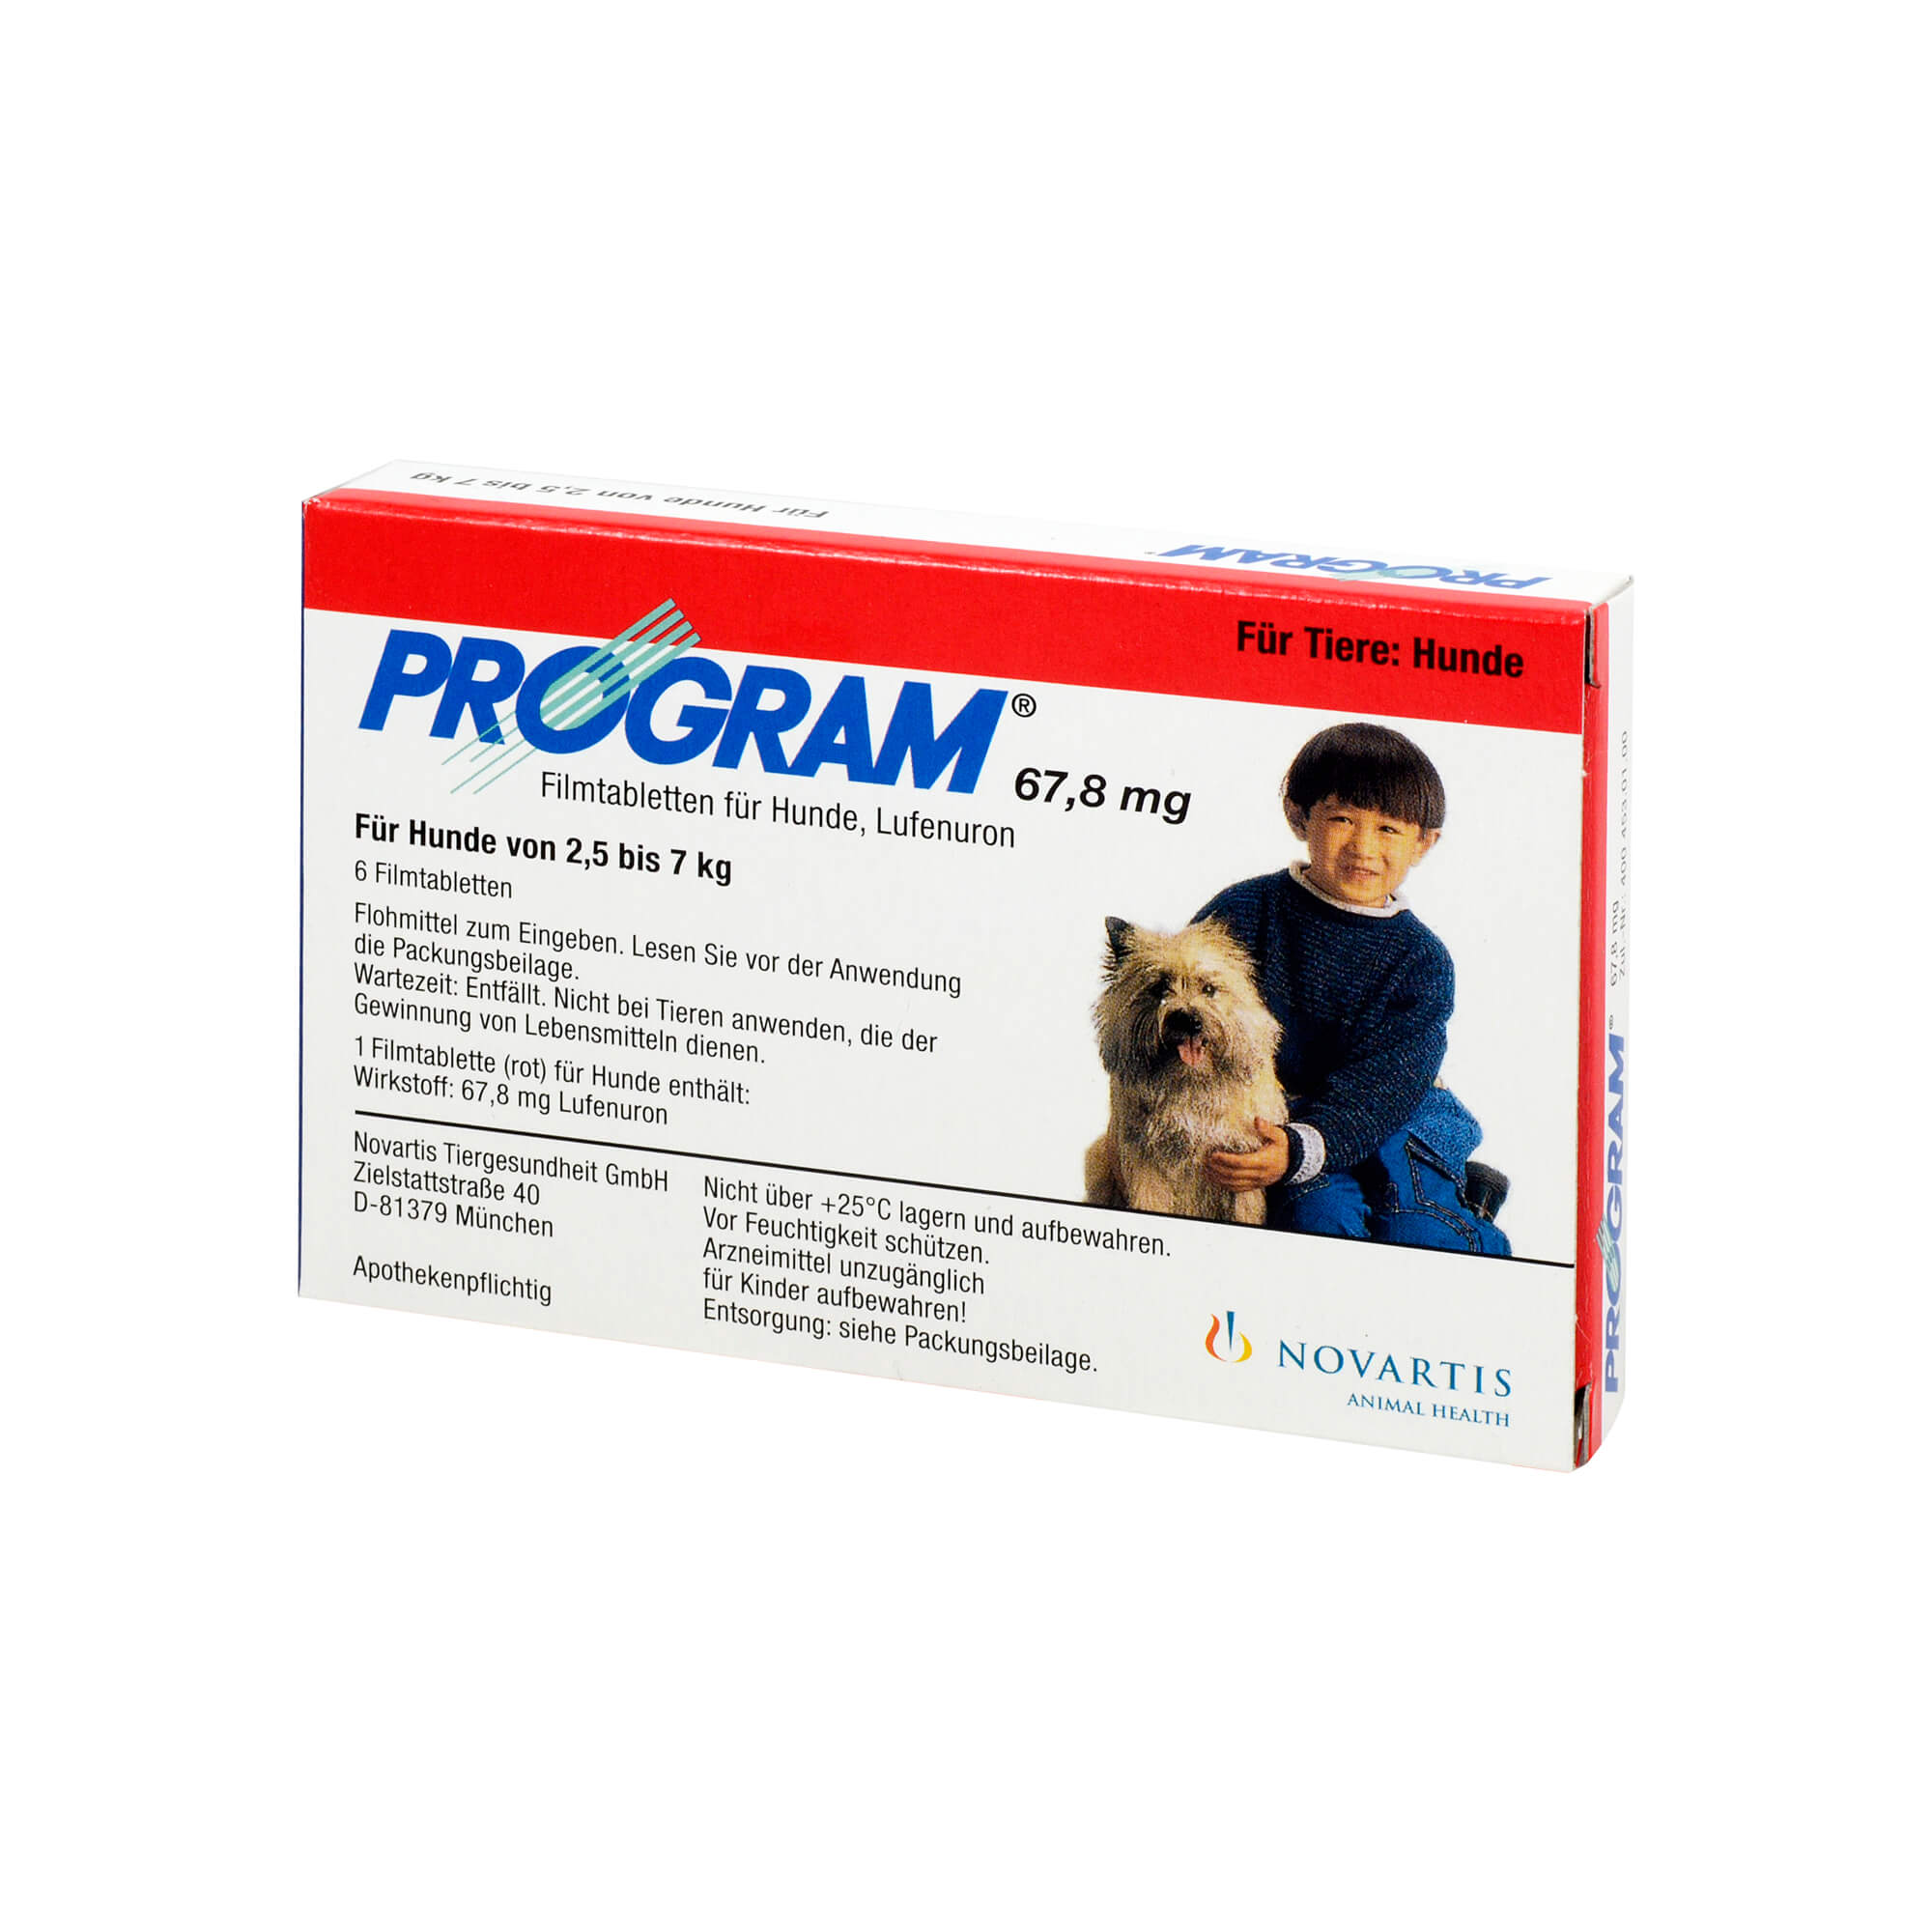 Program 67,8 mg